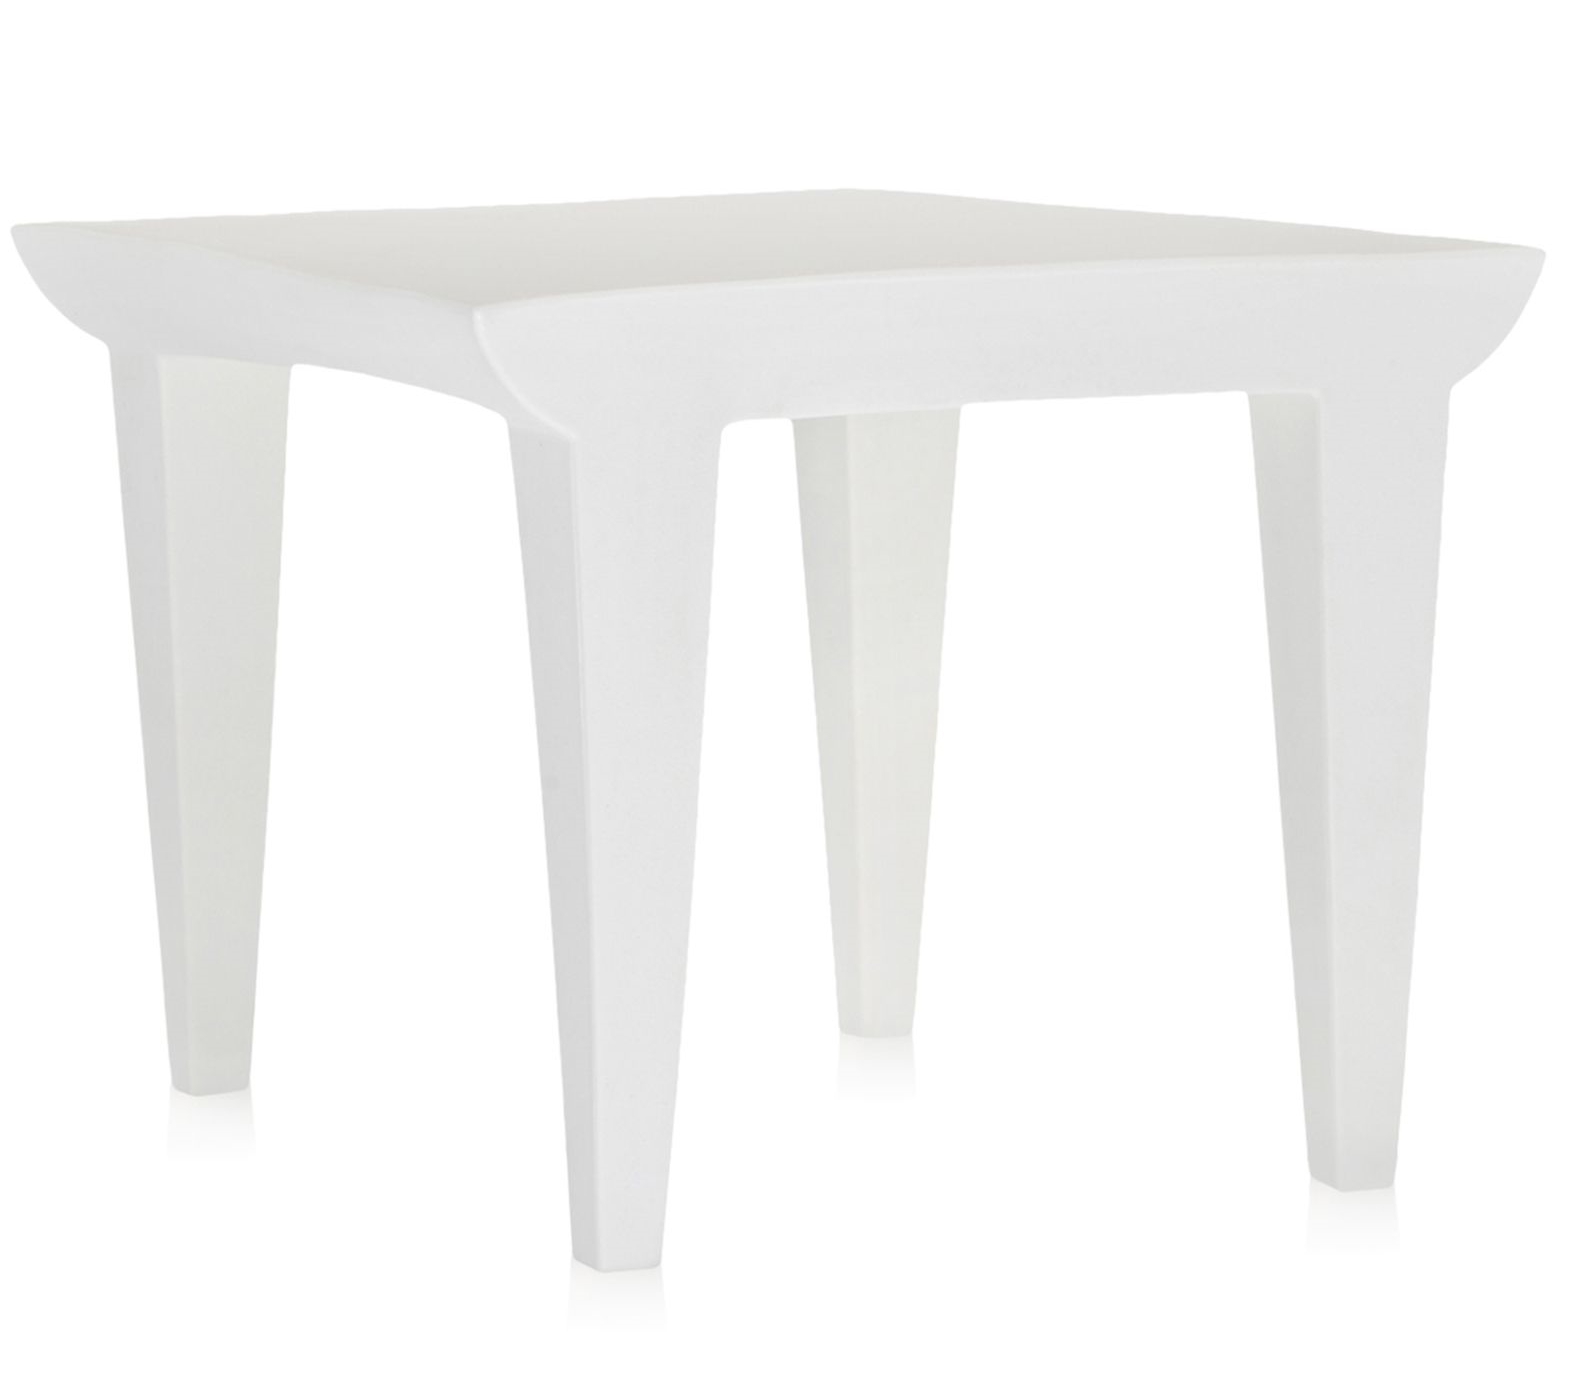 Masuta Kartell Bubble design Philippe Starck 51.5×51.5cm hx41.5cm alb zinc Living & Dining